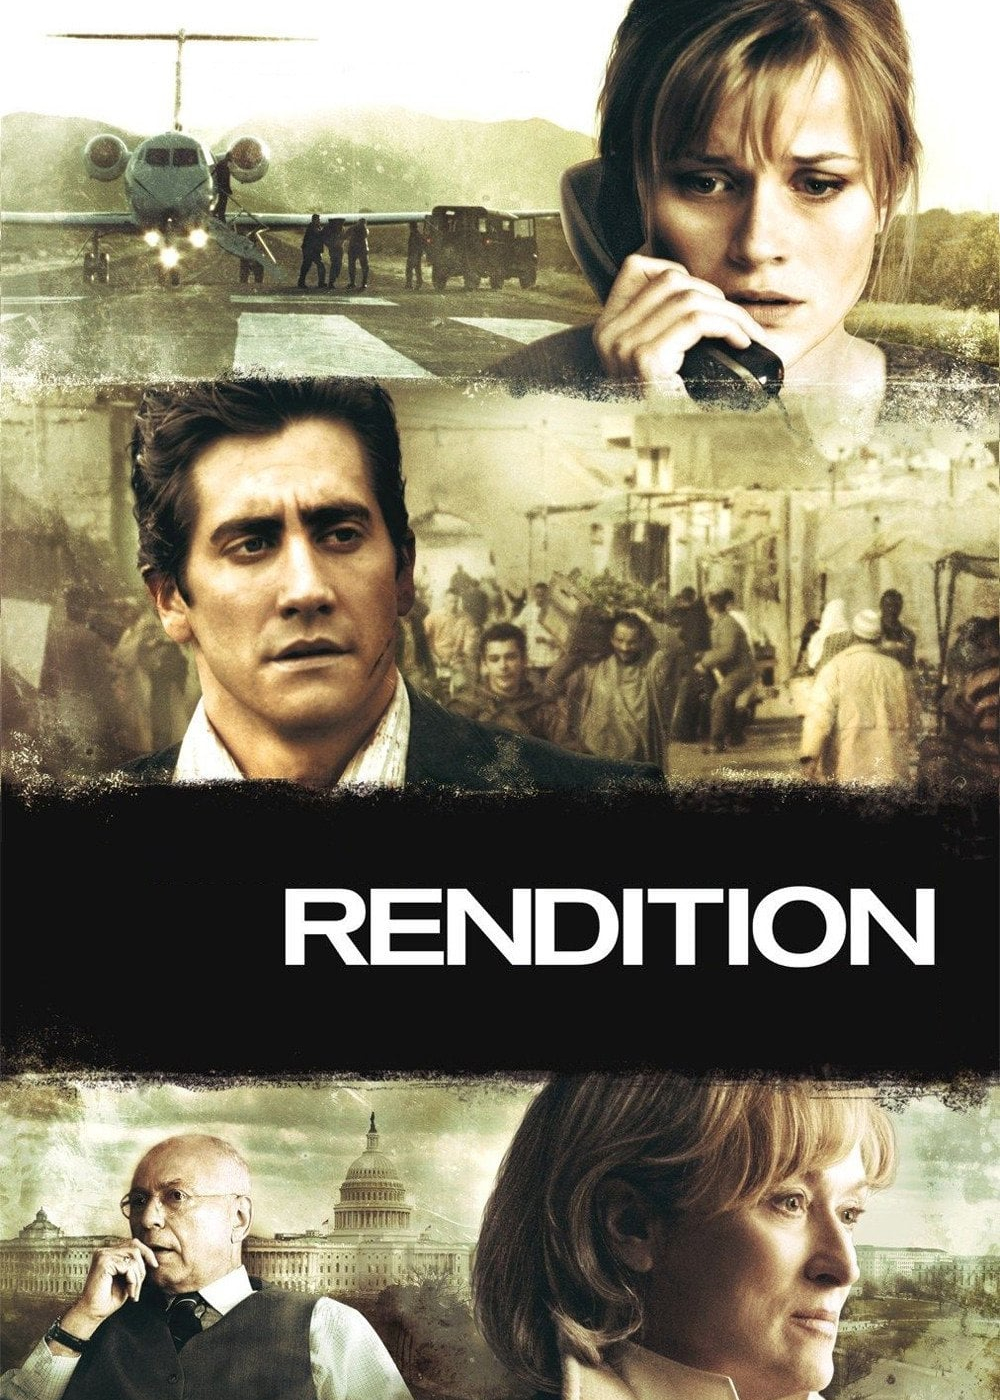 Rendition - Rendition